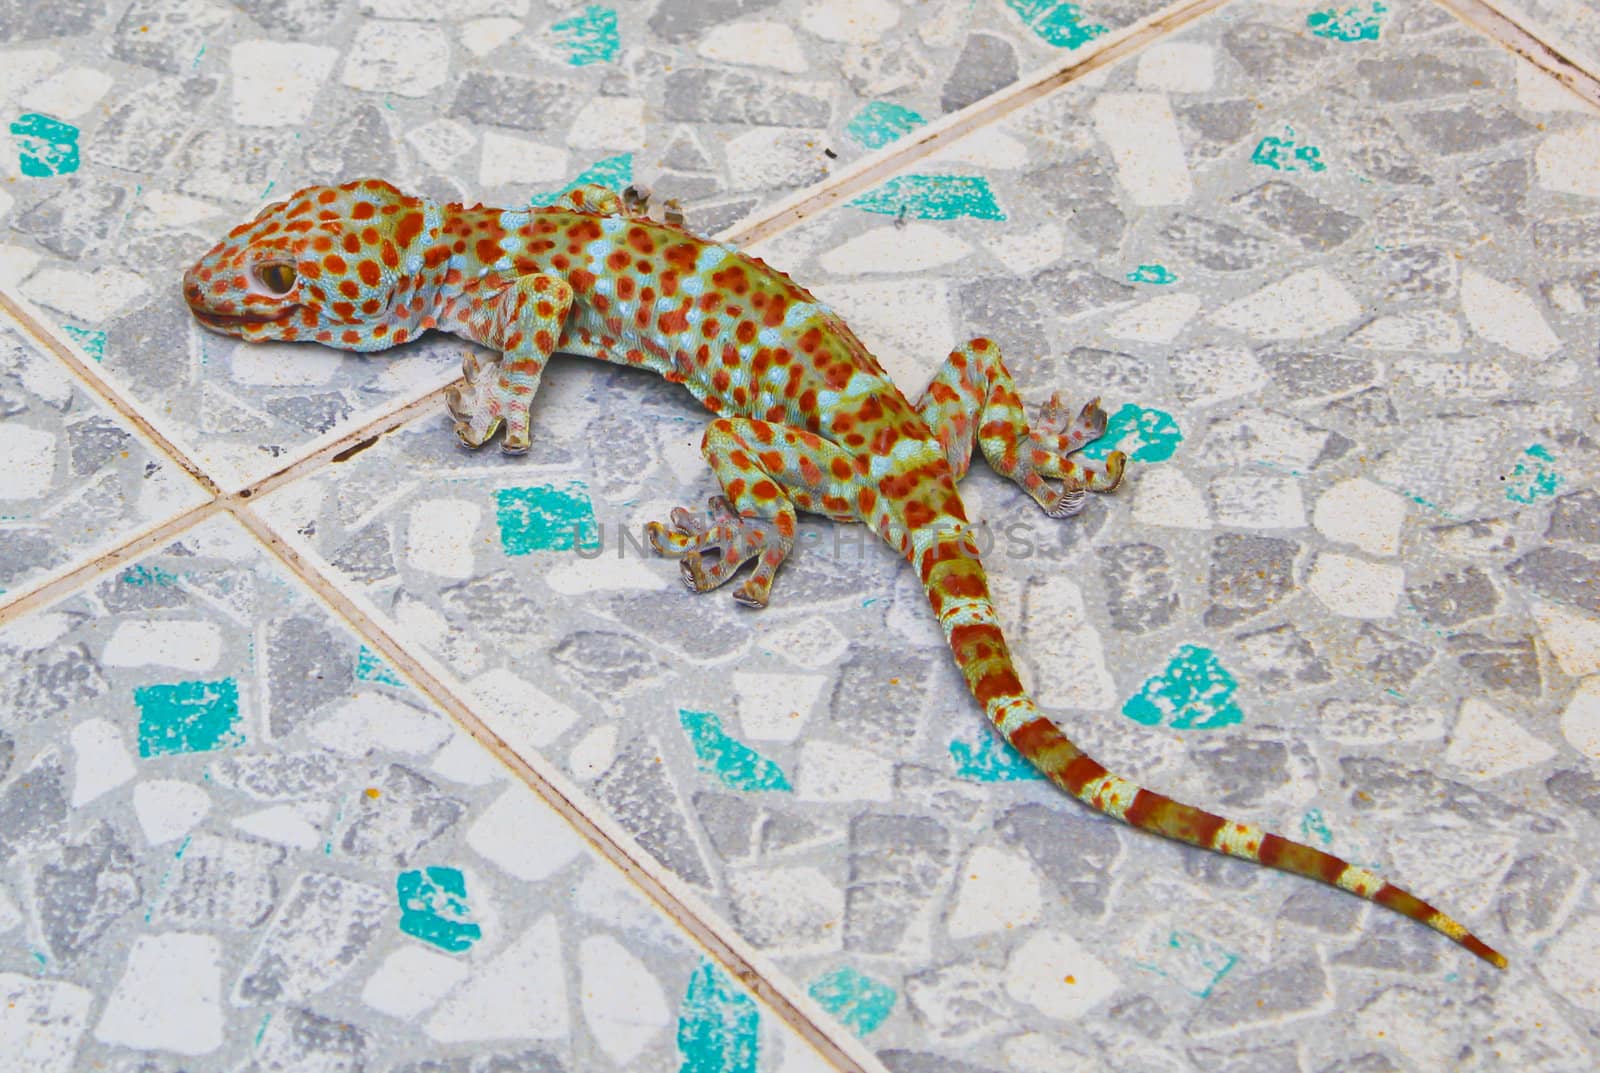 Died gecko on temple floor